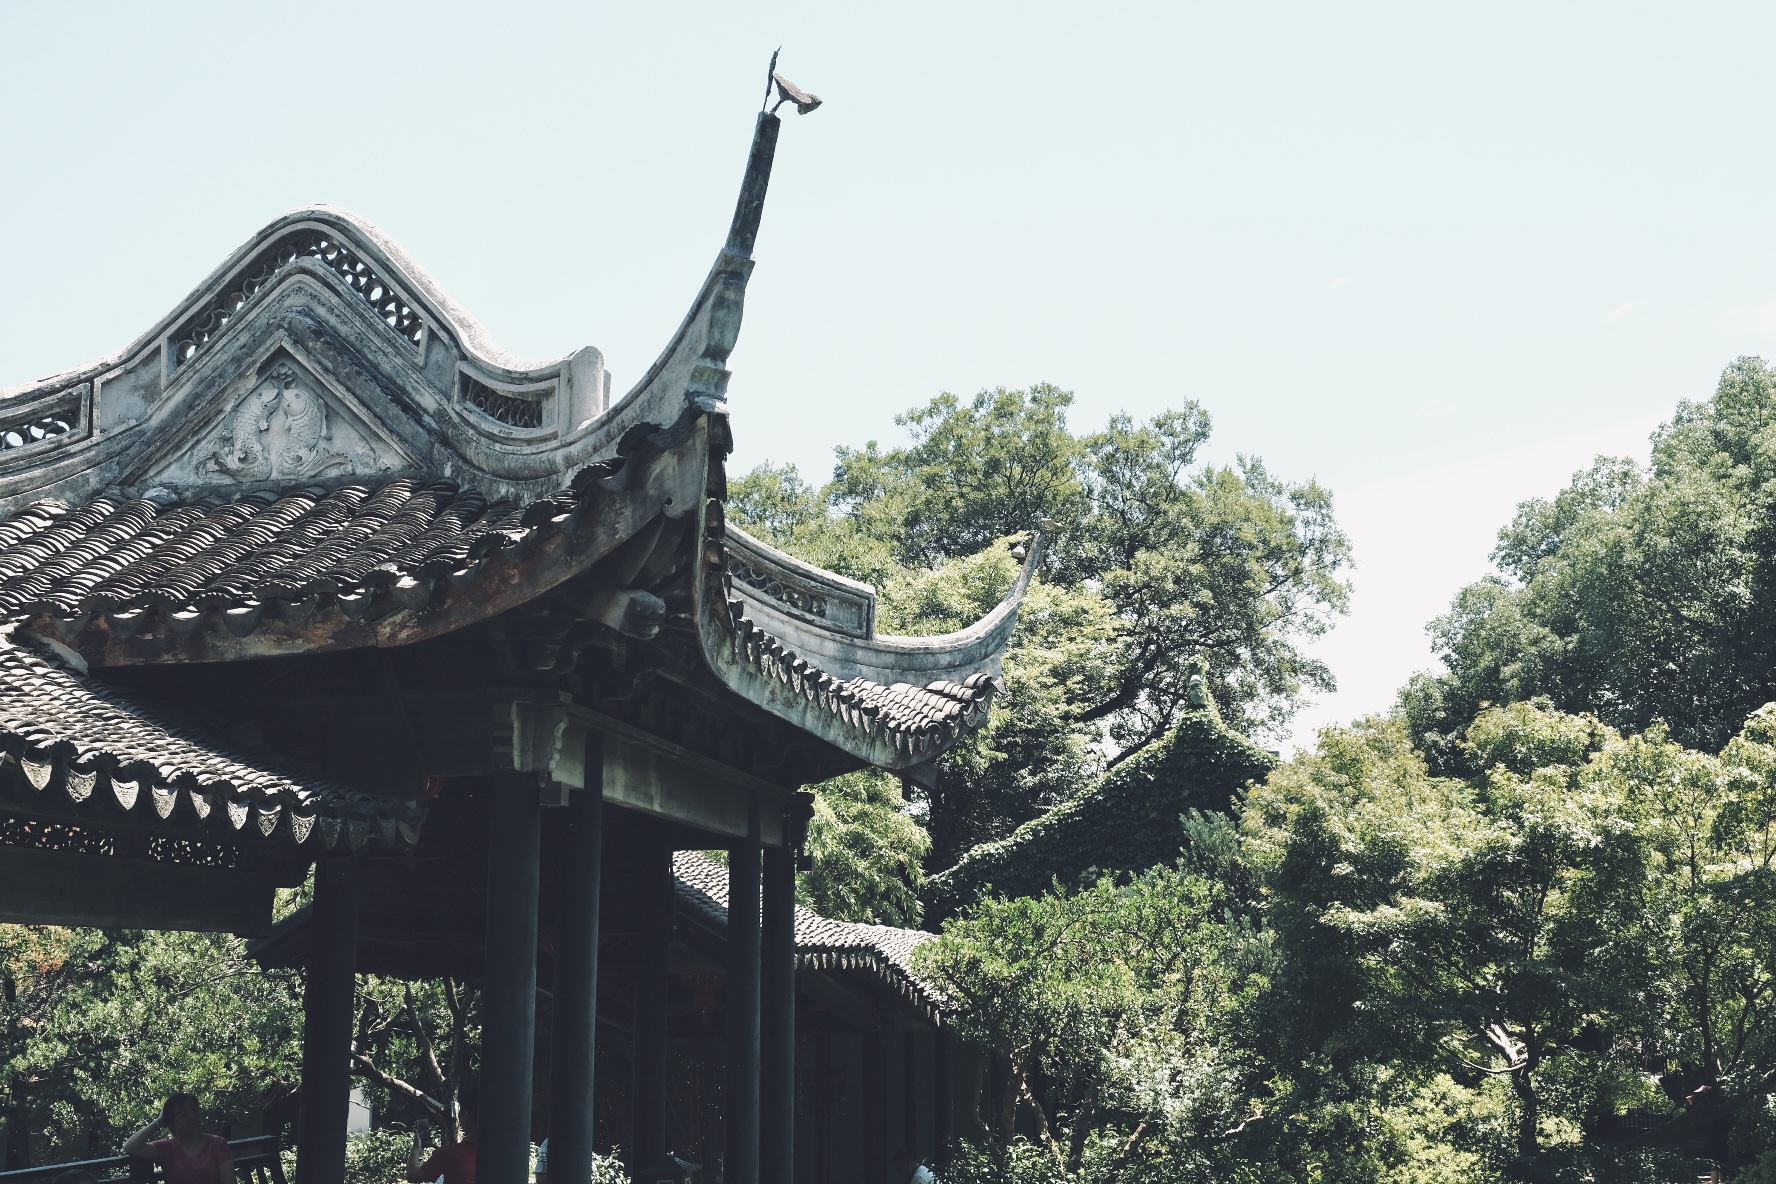 Jichang Garden in Wuxi: The hermit of Chinese gardens